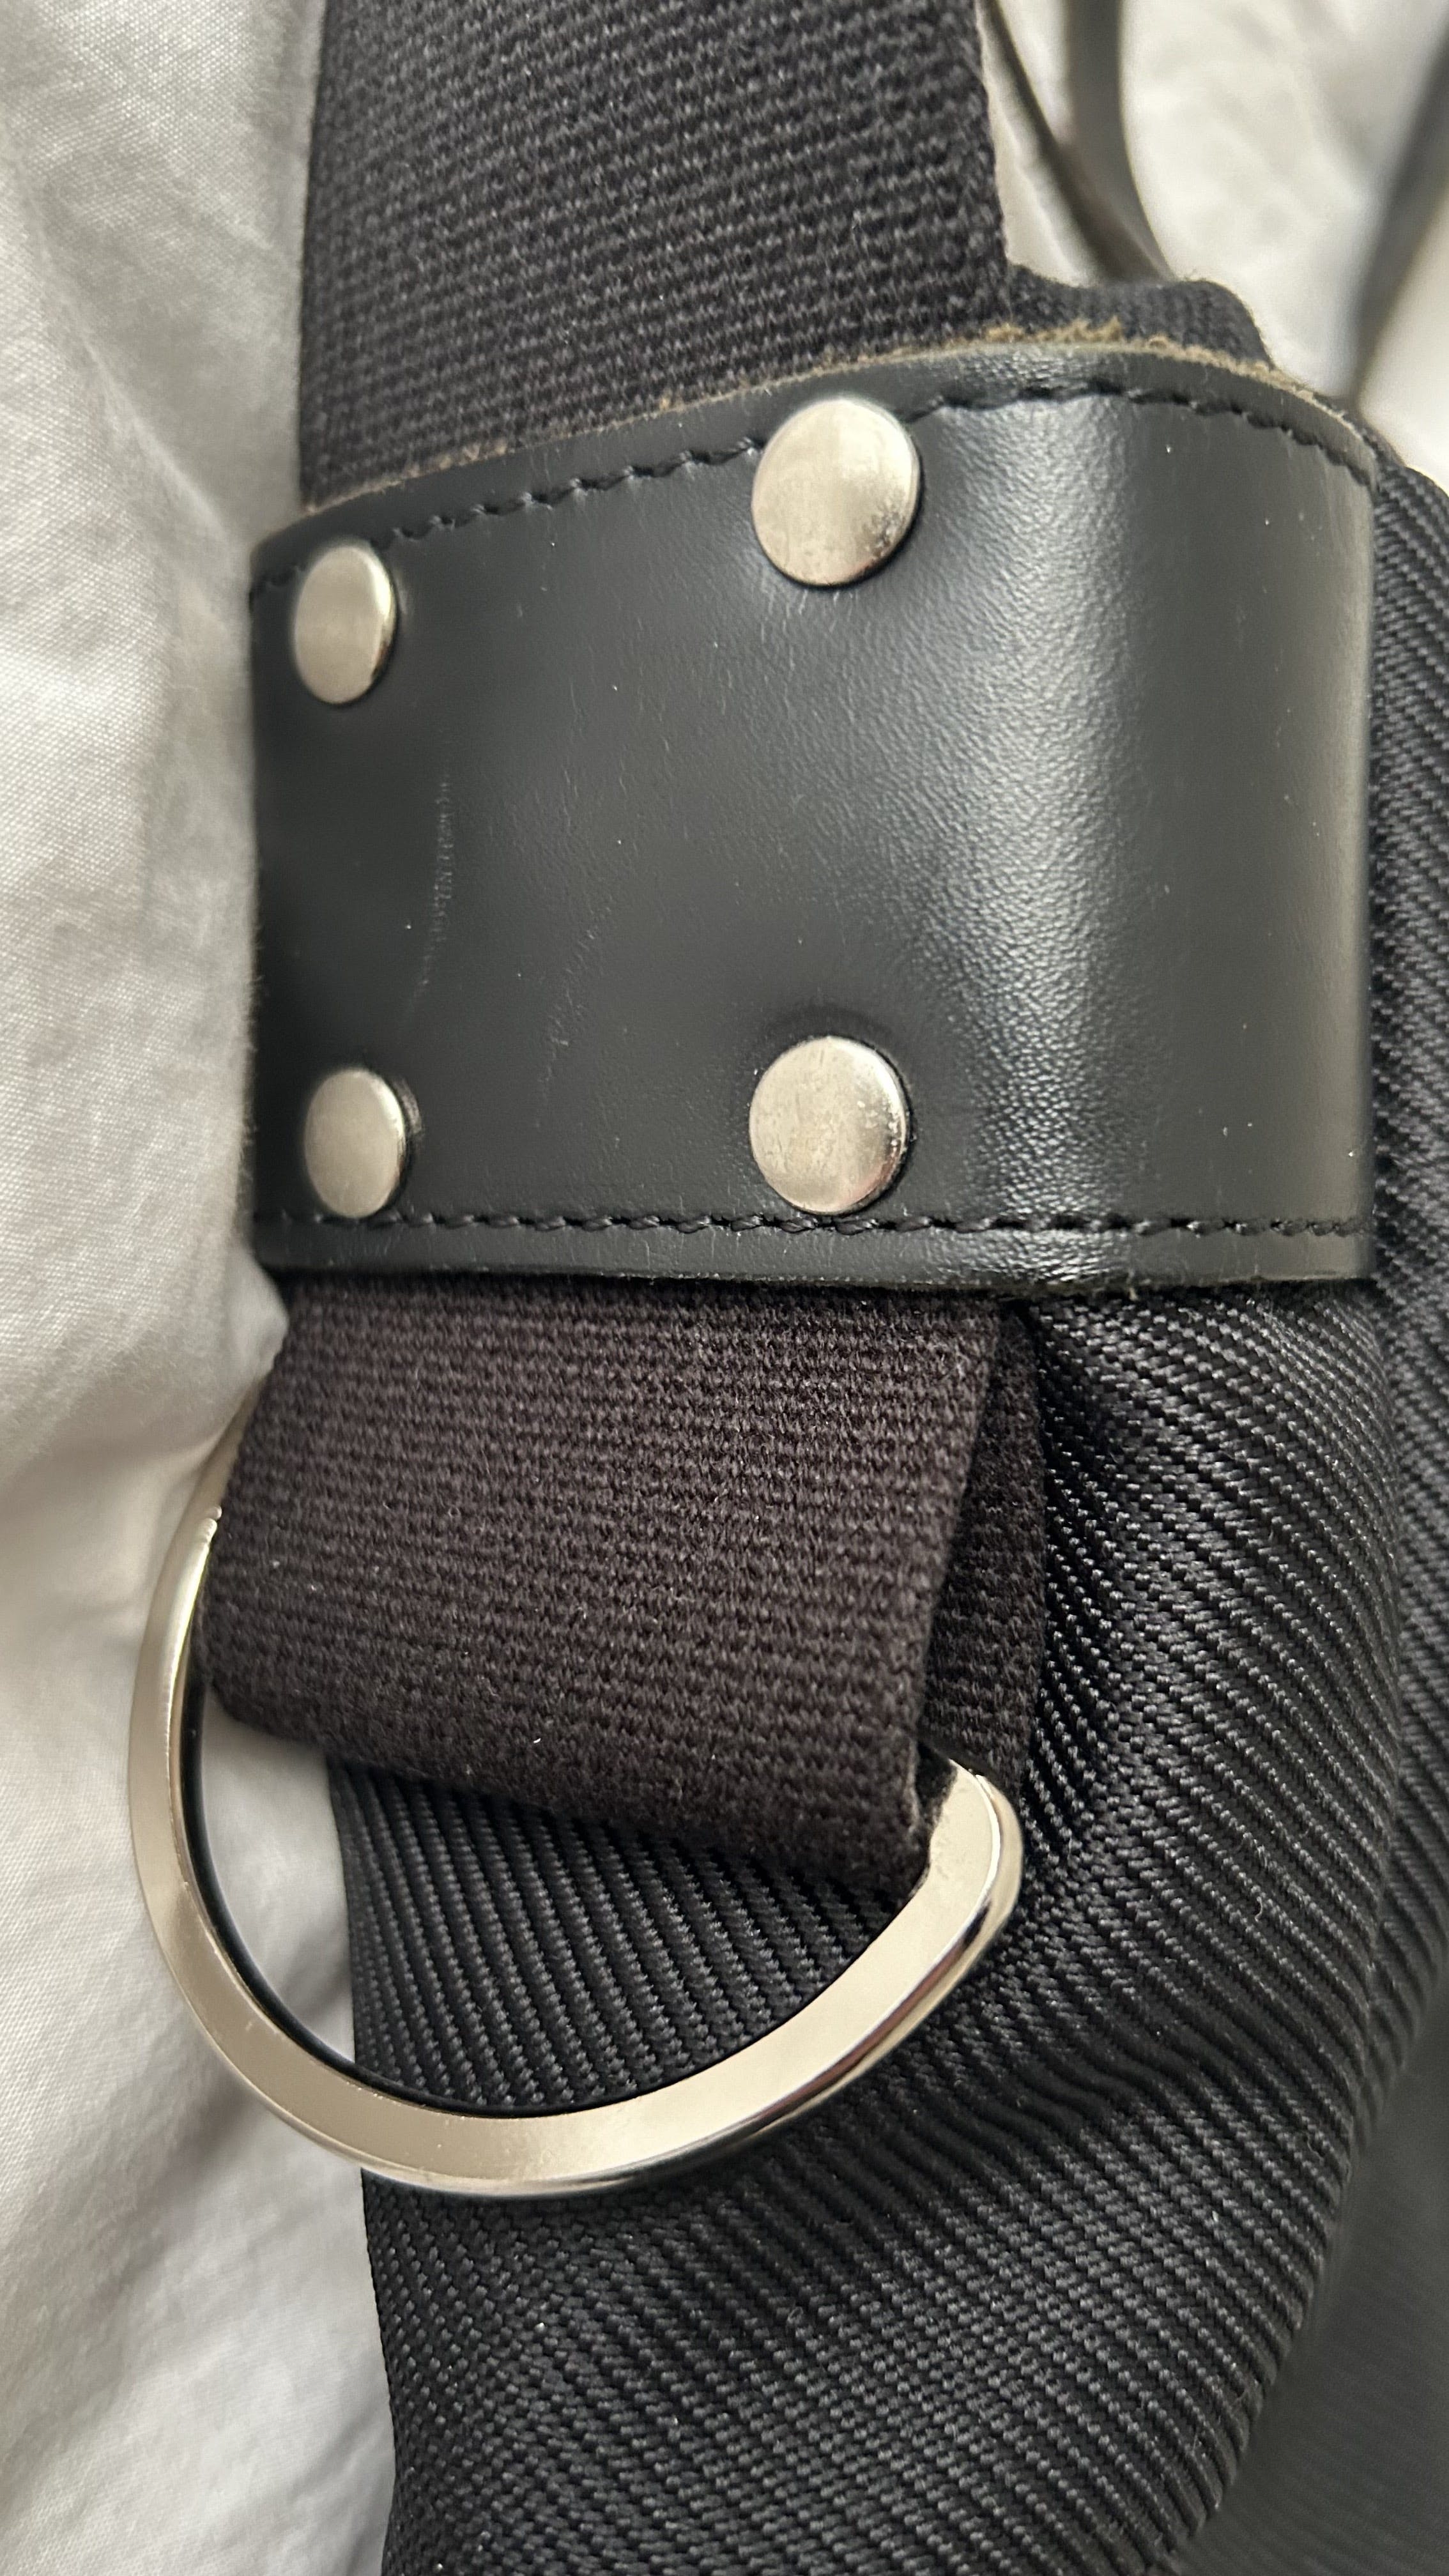 brand new and never worn black cordura bag - 6